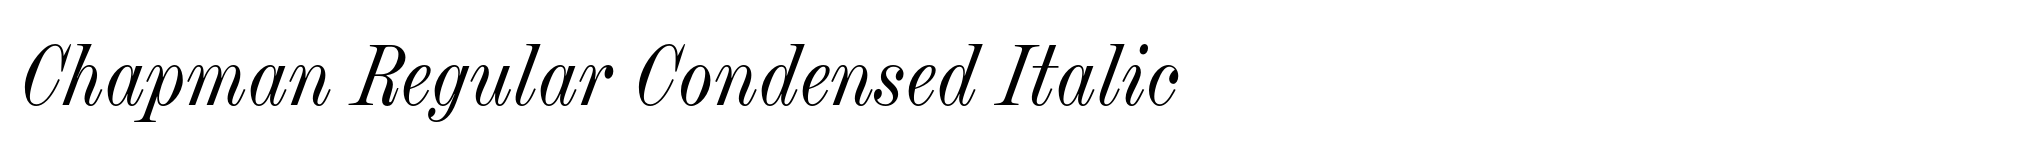 Chapman Regular Condensed Italic image